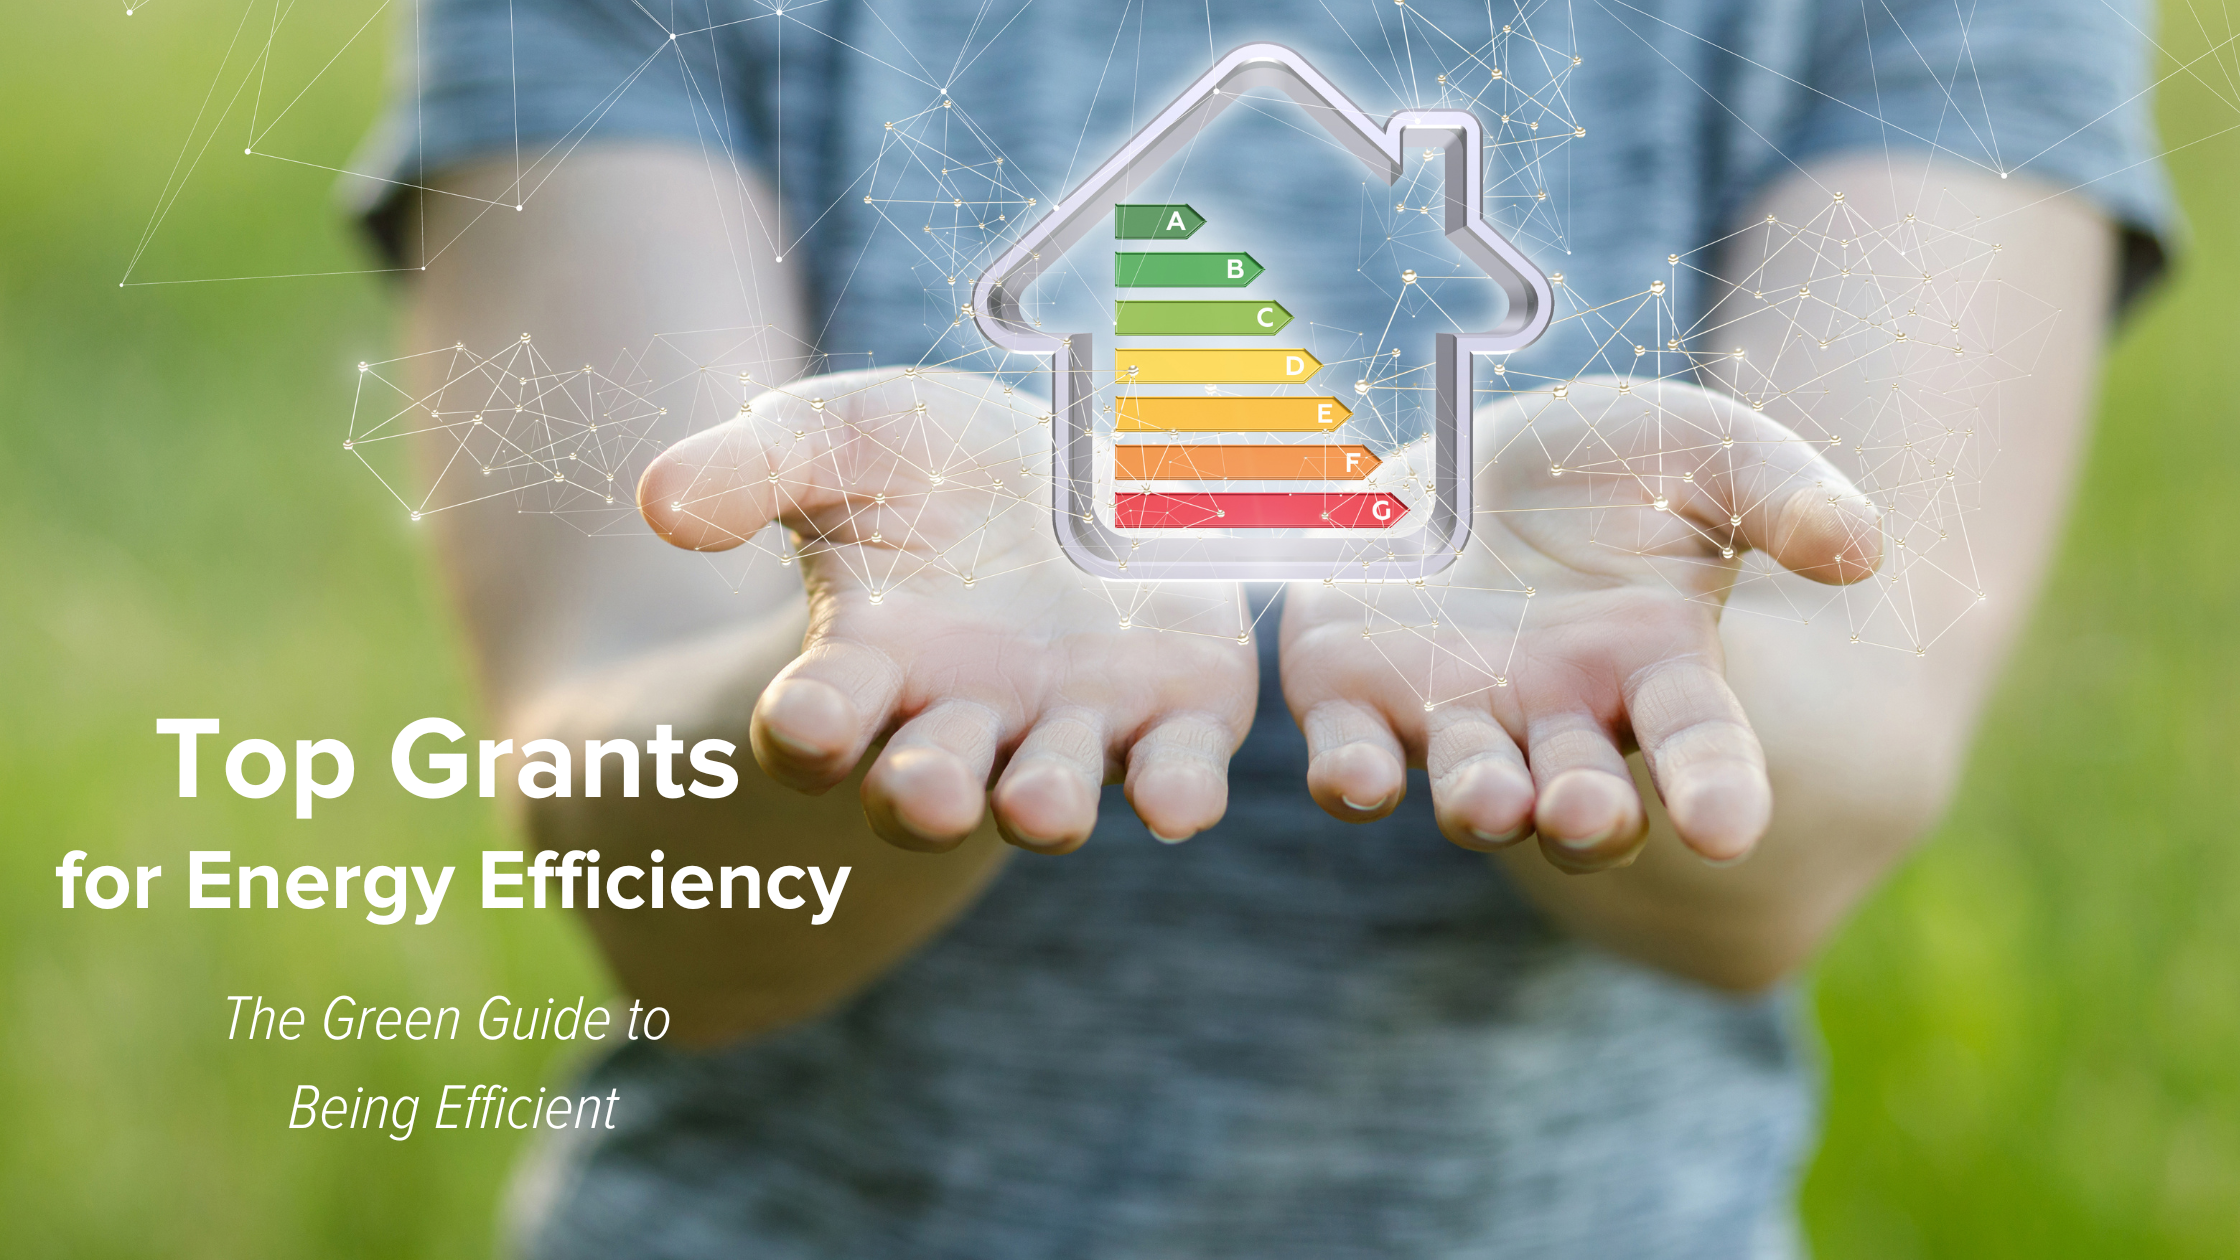 Top Grants for the Energy Efficiency Industry